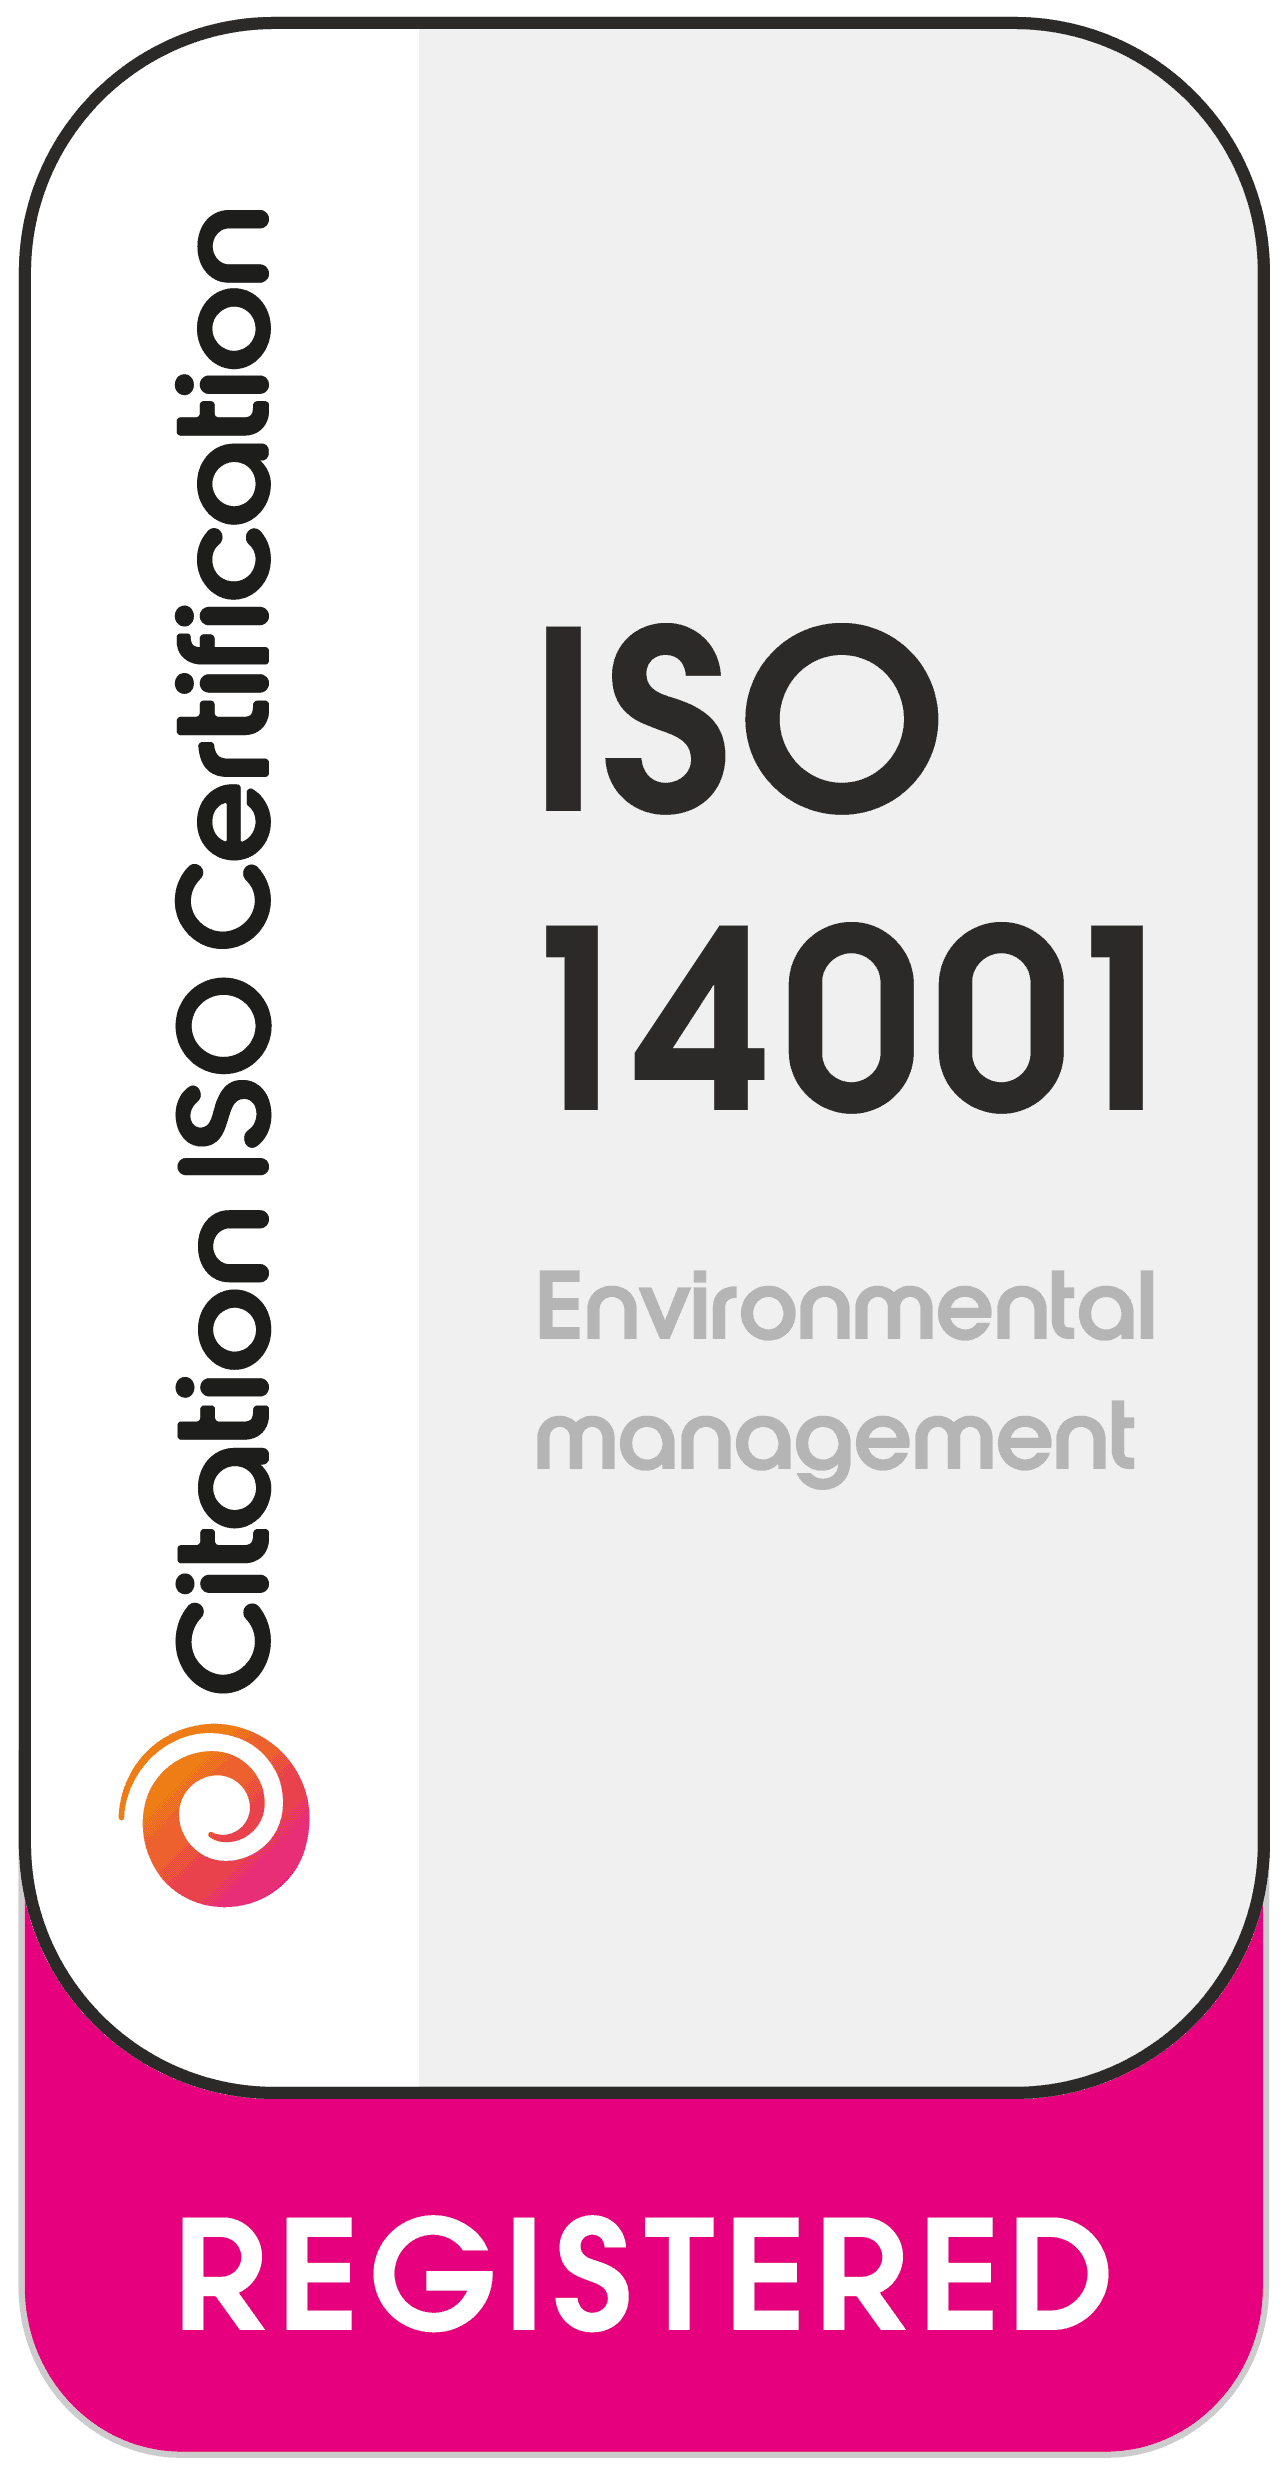 URS ISO 9001 Logo PNG Transparent & SVG Vector - Freebie Supply